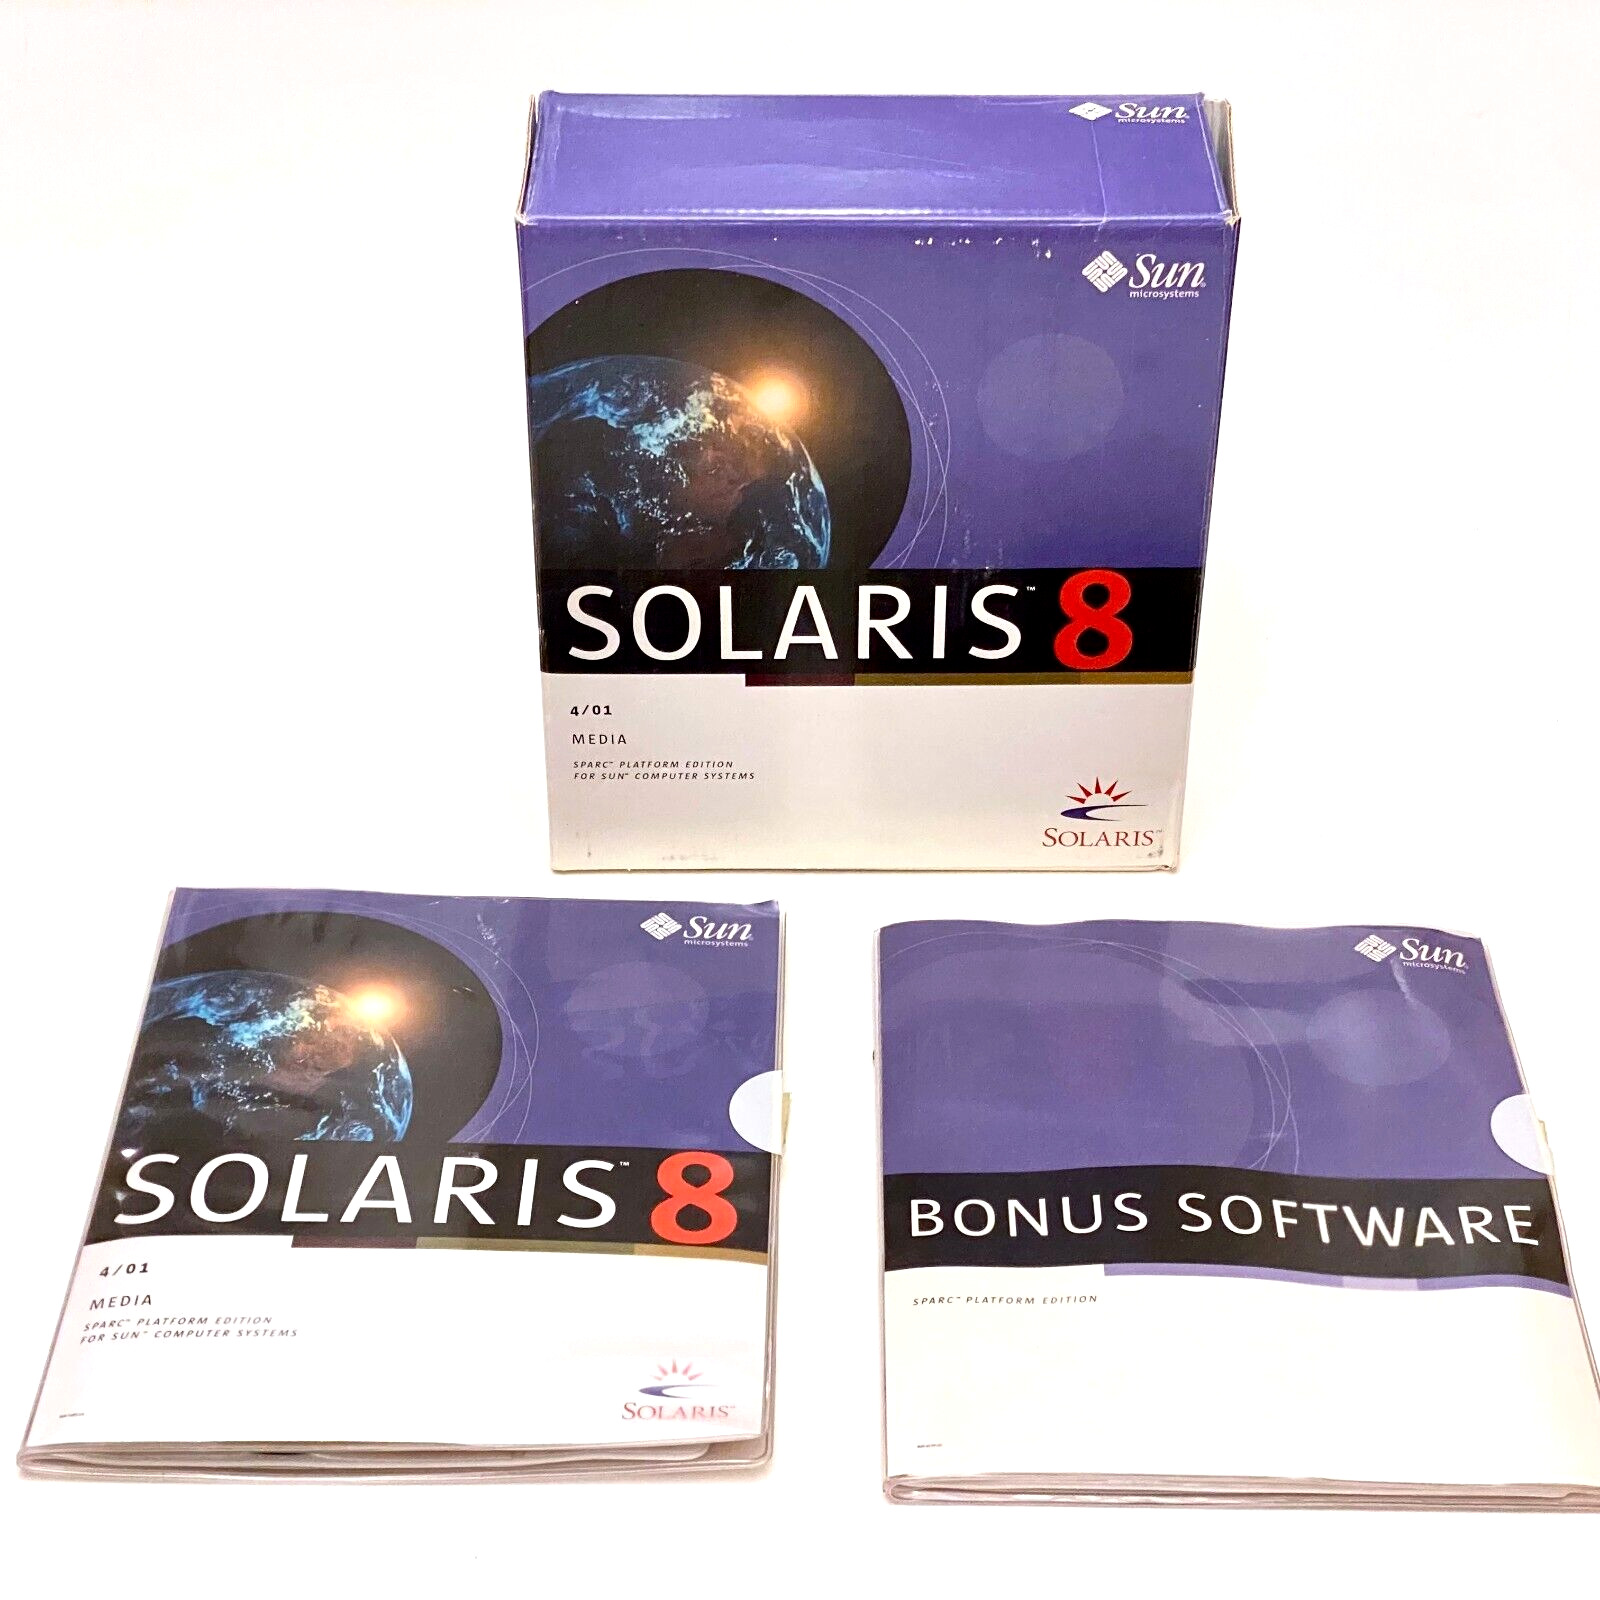 Sun Microsystems Solaris 8 Sparc Media Edition 4 / 01 with Bonus Software